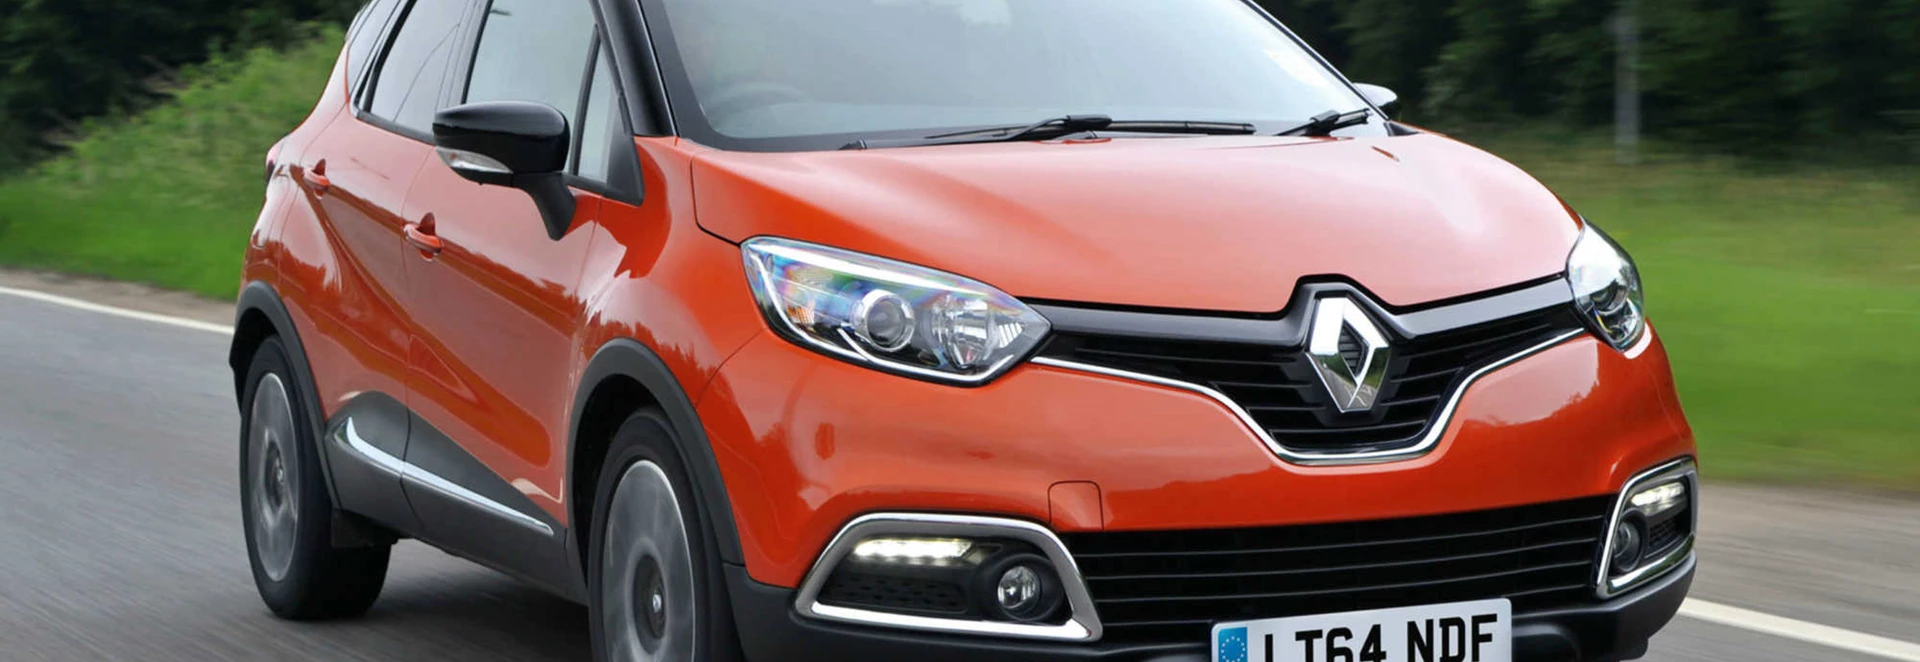 Renault Captur crossover review - Car Keys